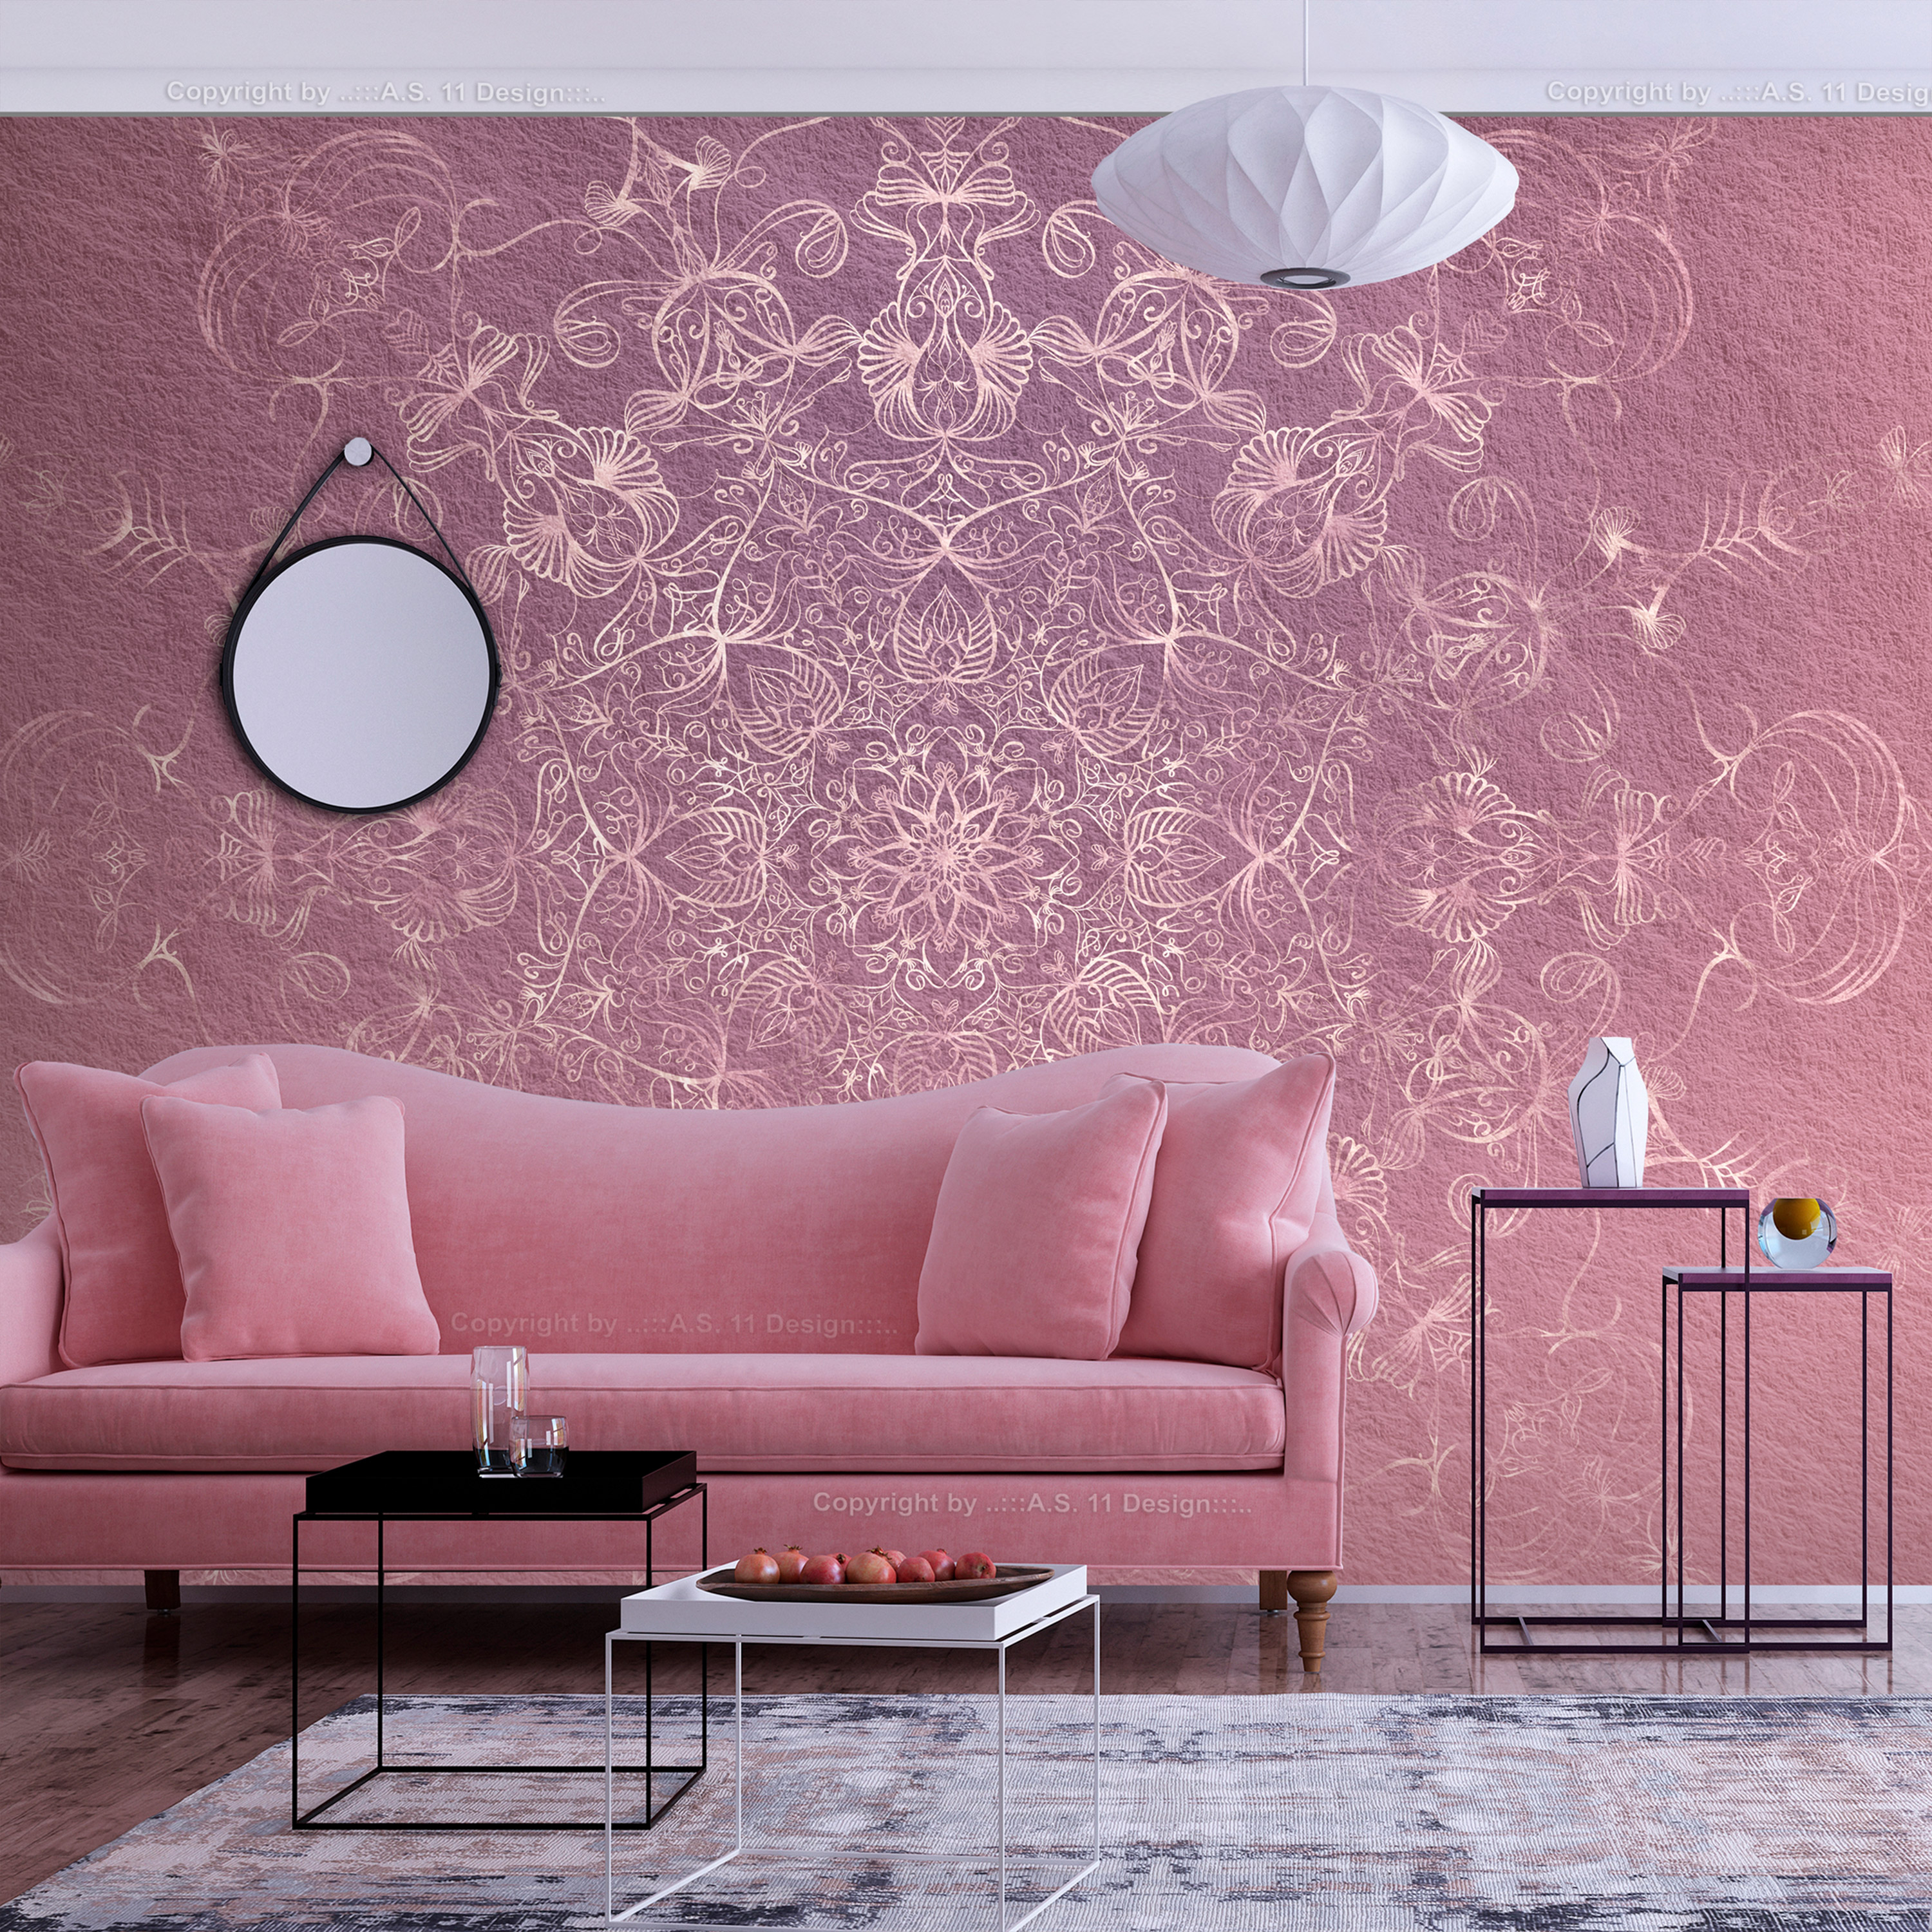 Self-adhesive Wallpaper - Calm in Pastels - 98x70